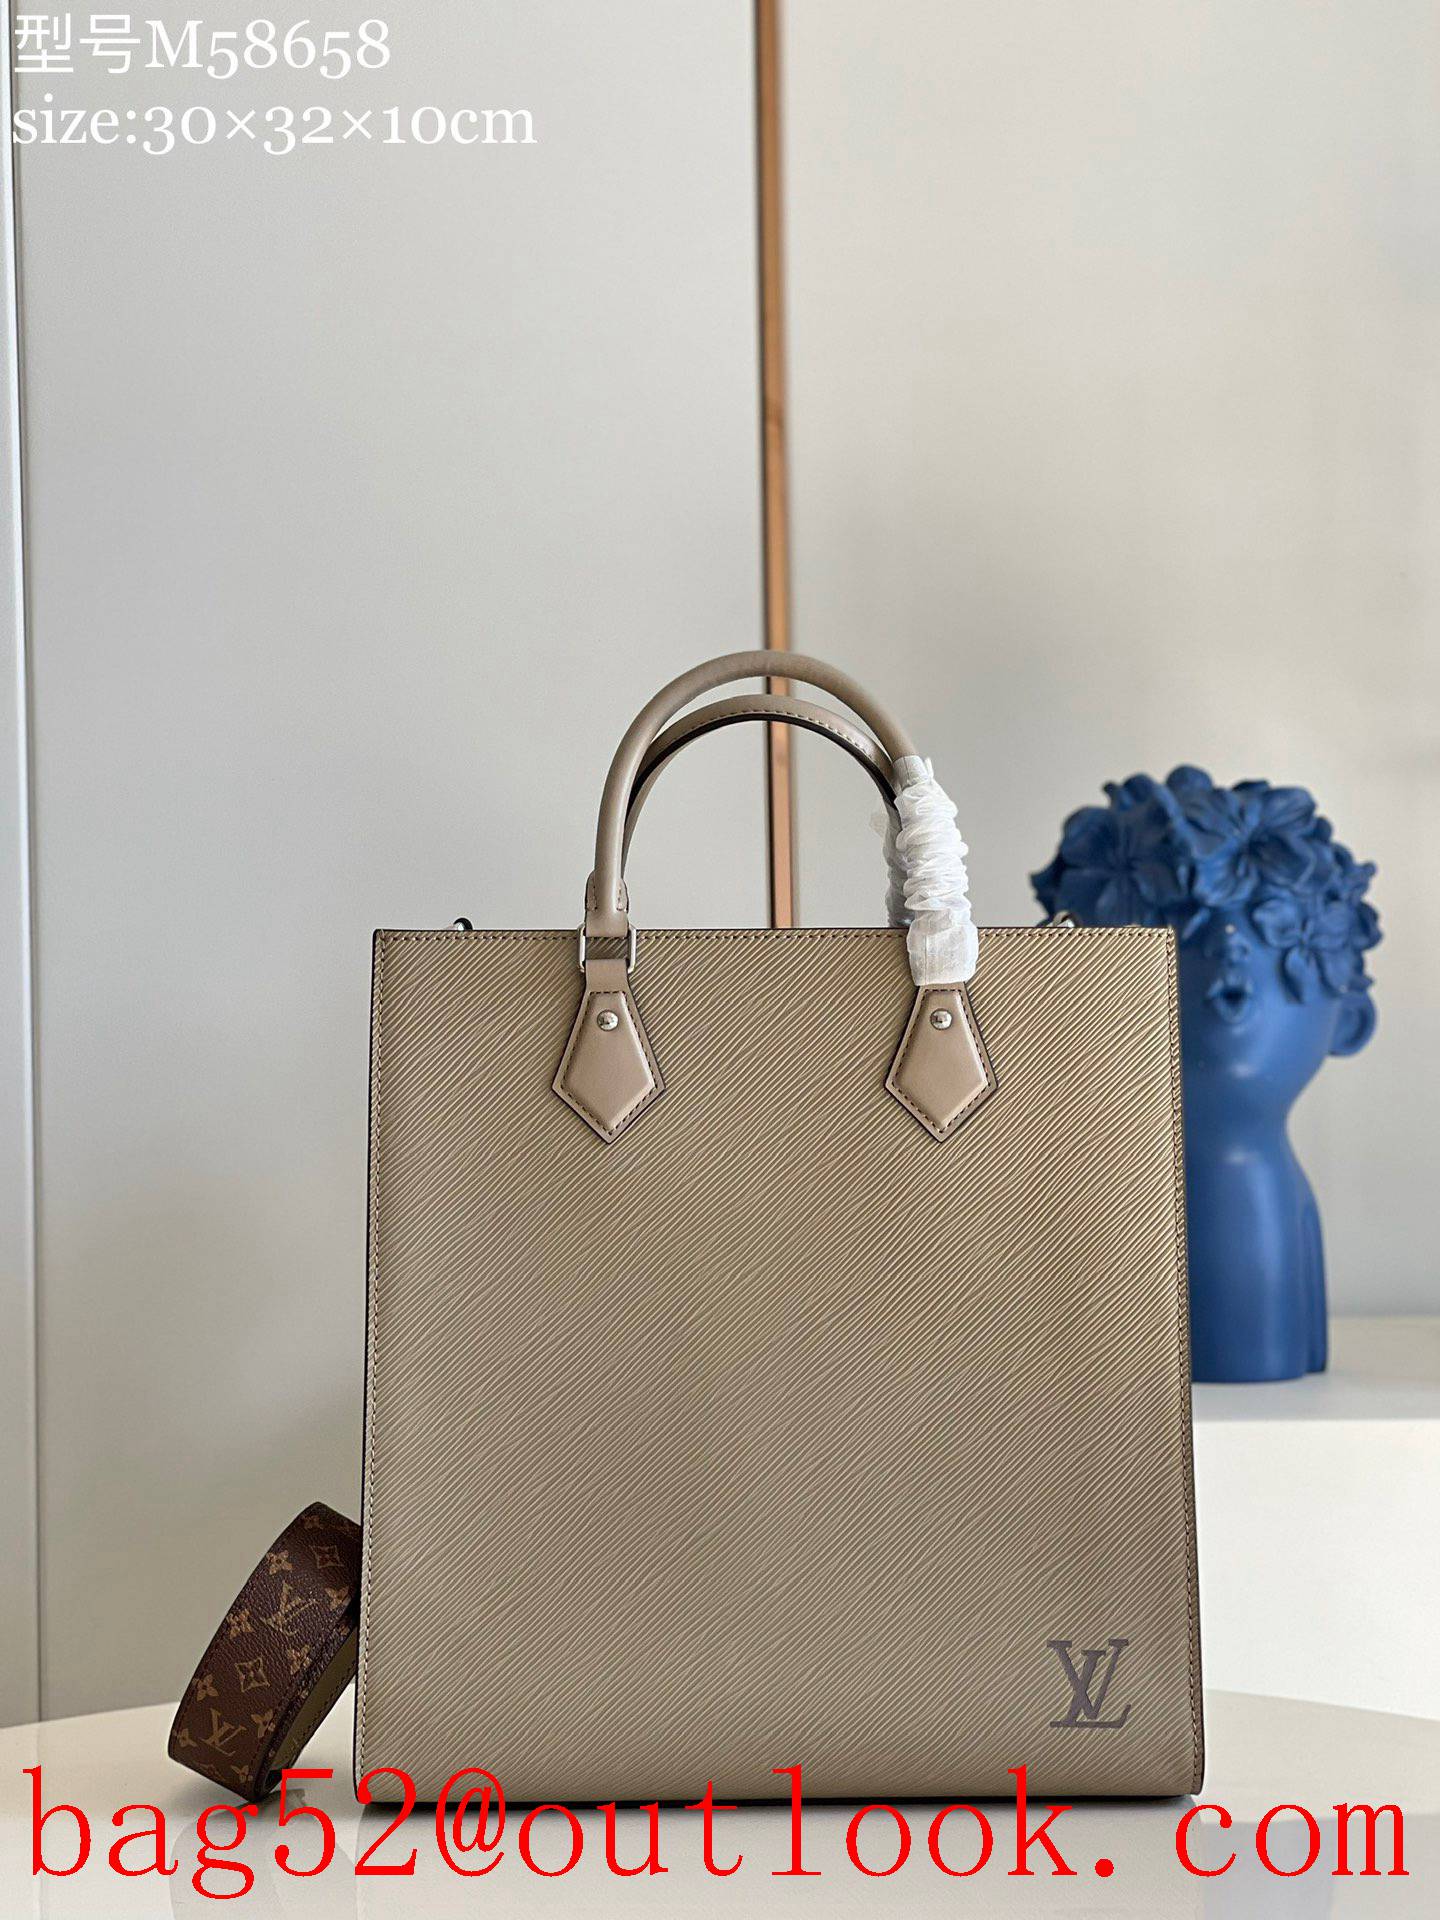 Louis Vuitton LV Sac Plat PM Epi Leather Carryall Bag Handbag M58658 Khaki